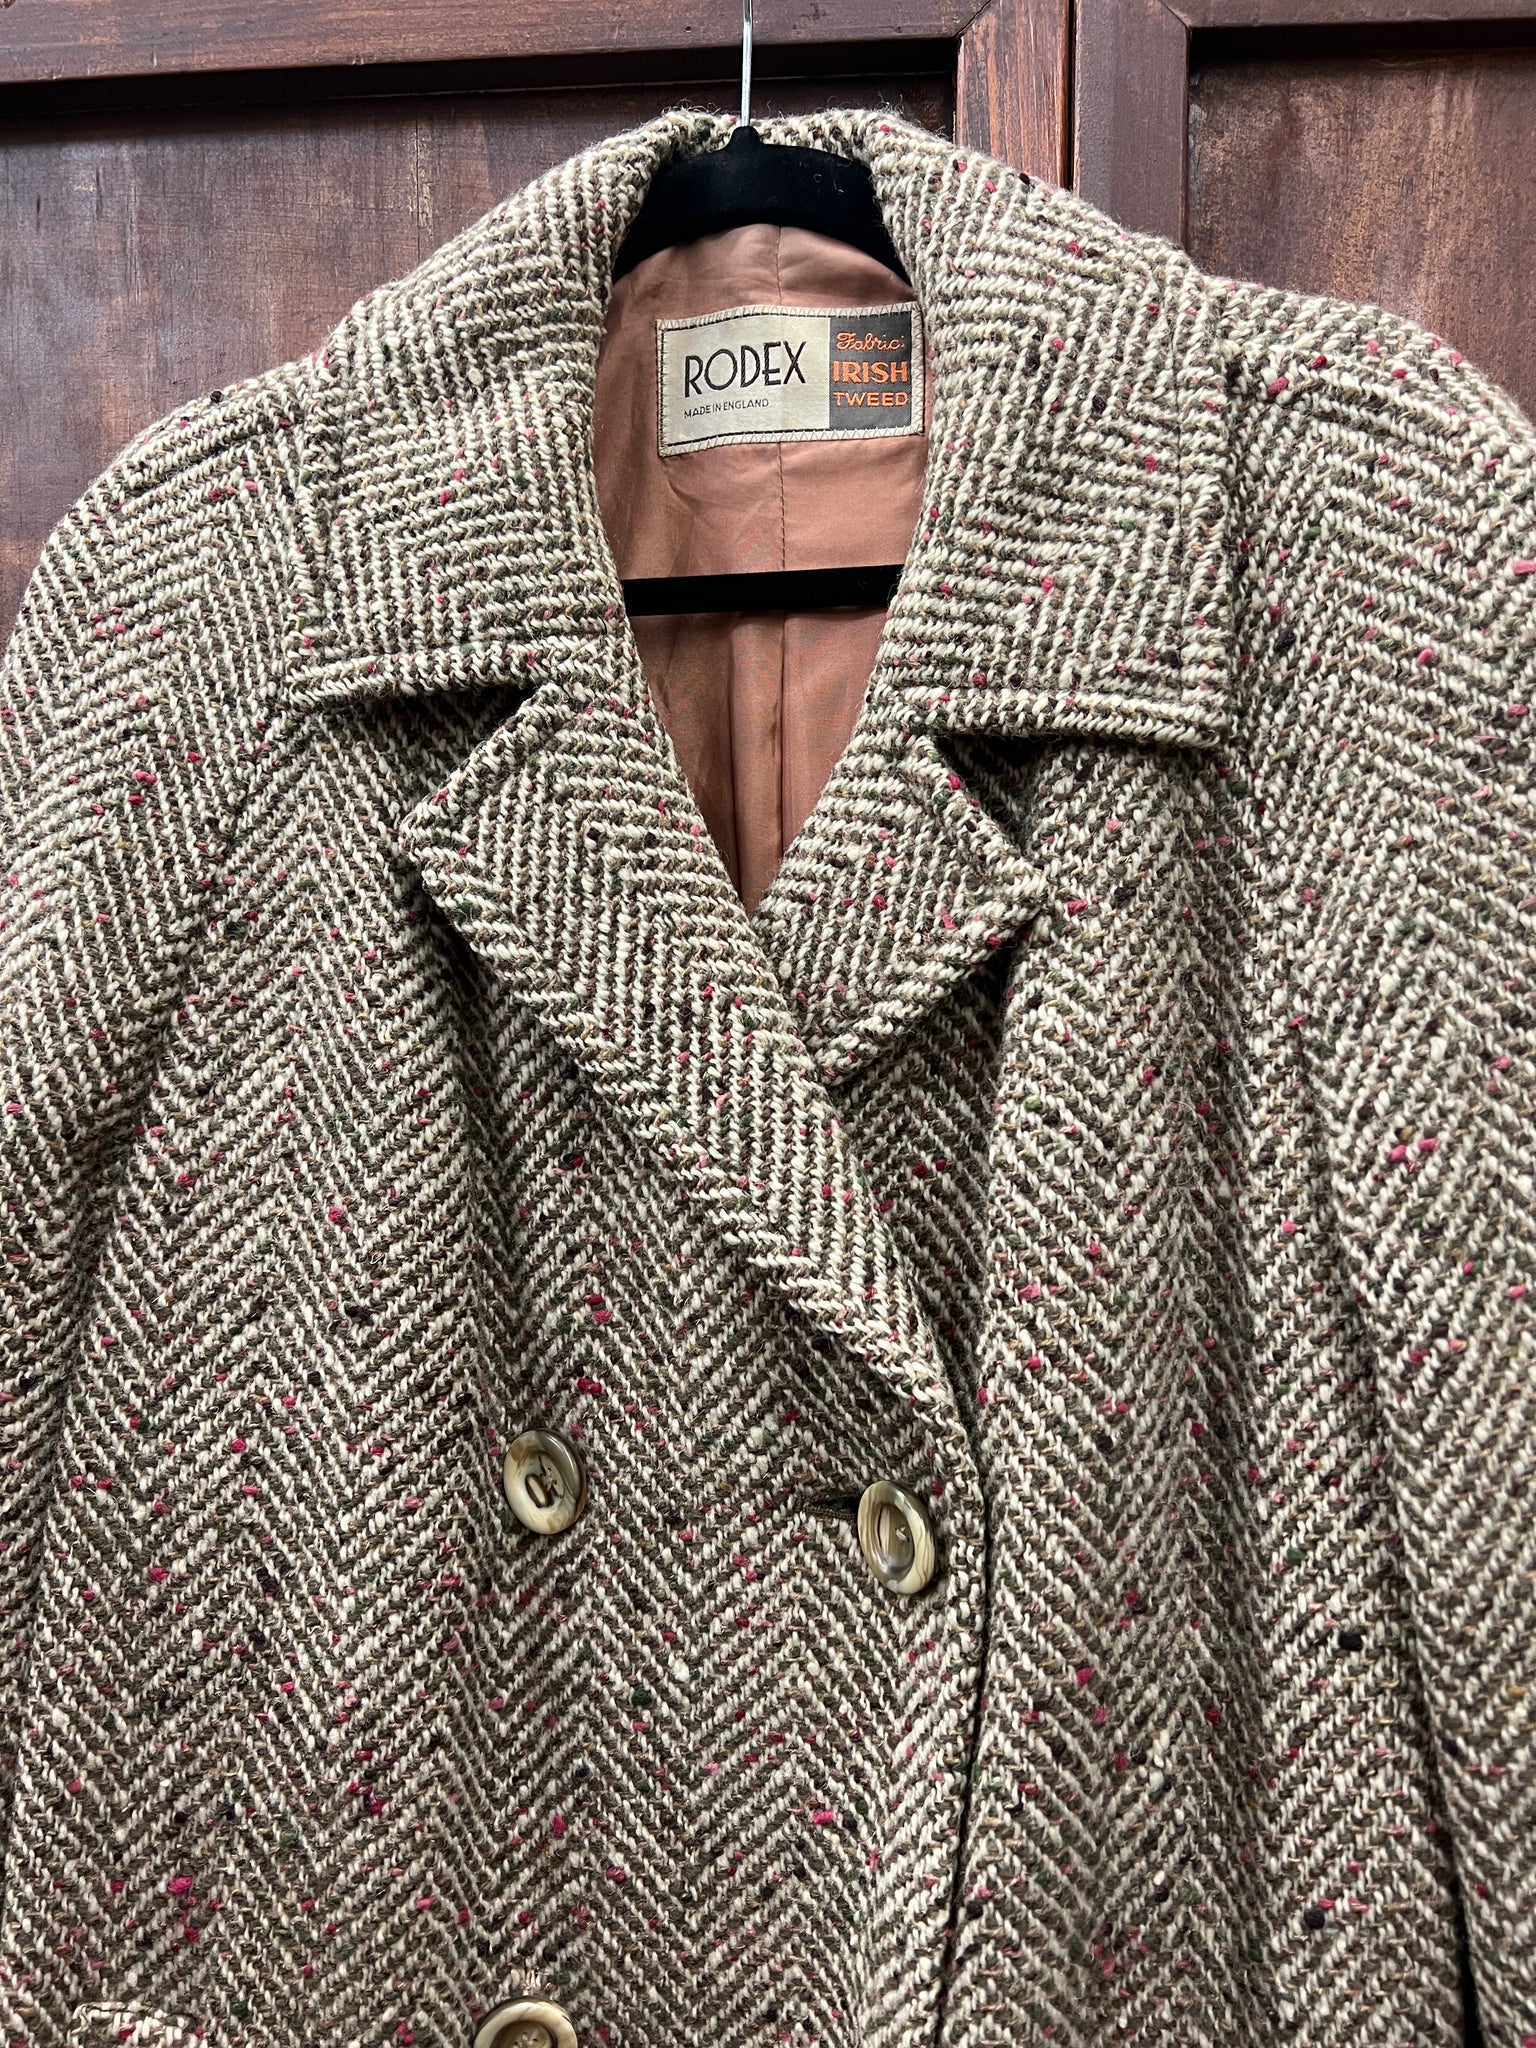 1970s JACKET- Rodex tweed winter coat double breasted w/belt